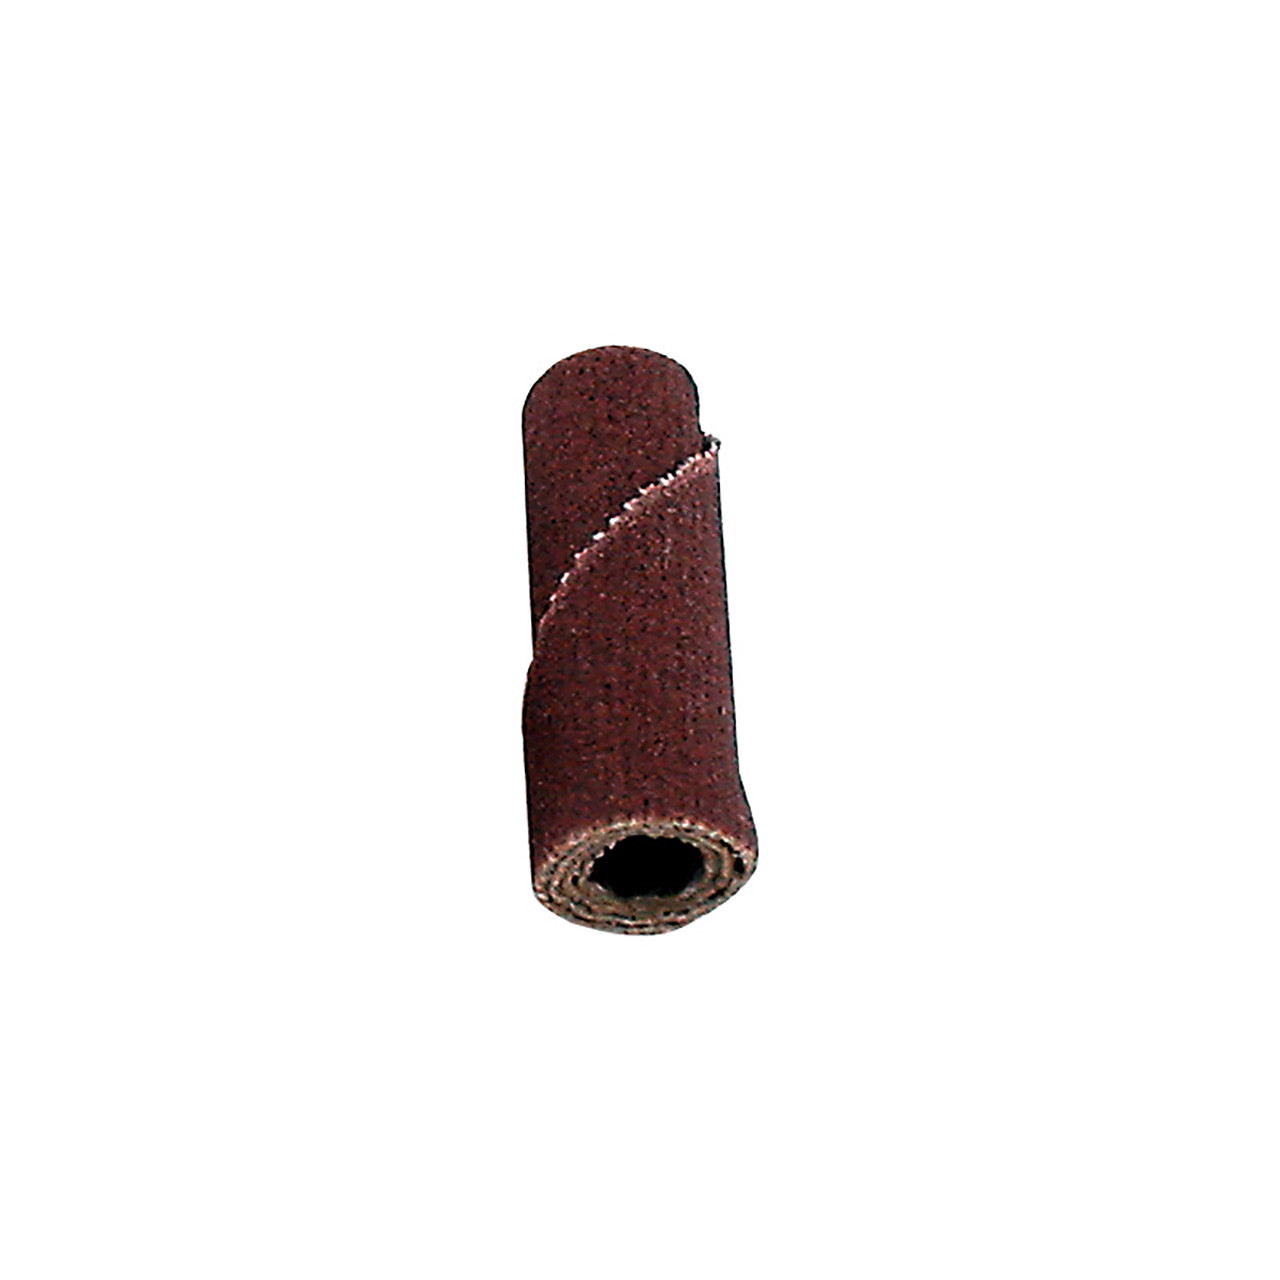 Abrasive Cartridge Rolls - 1/4" x 3/4" x 1/8", 320 Grit